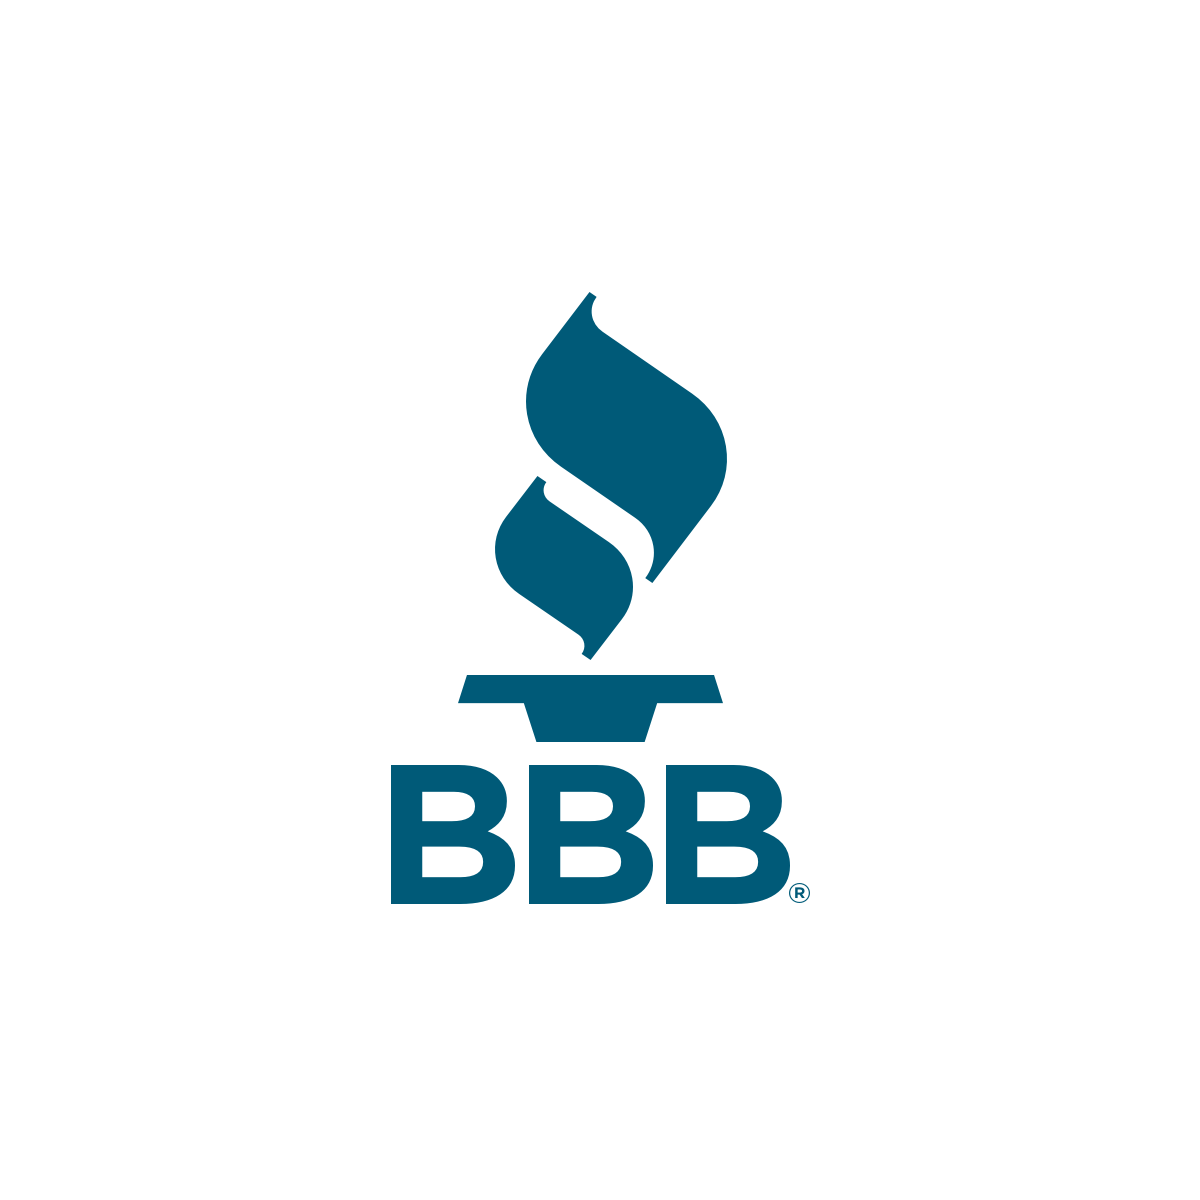 BBB logo - square